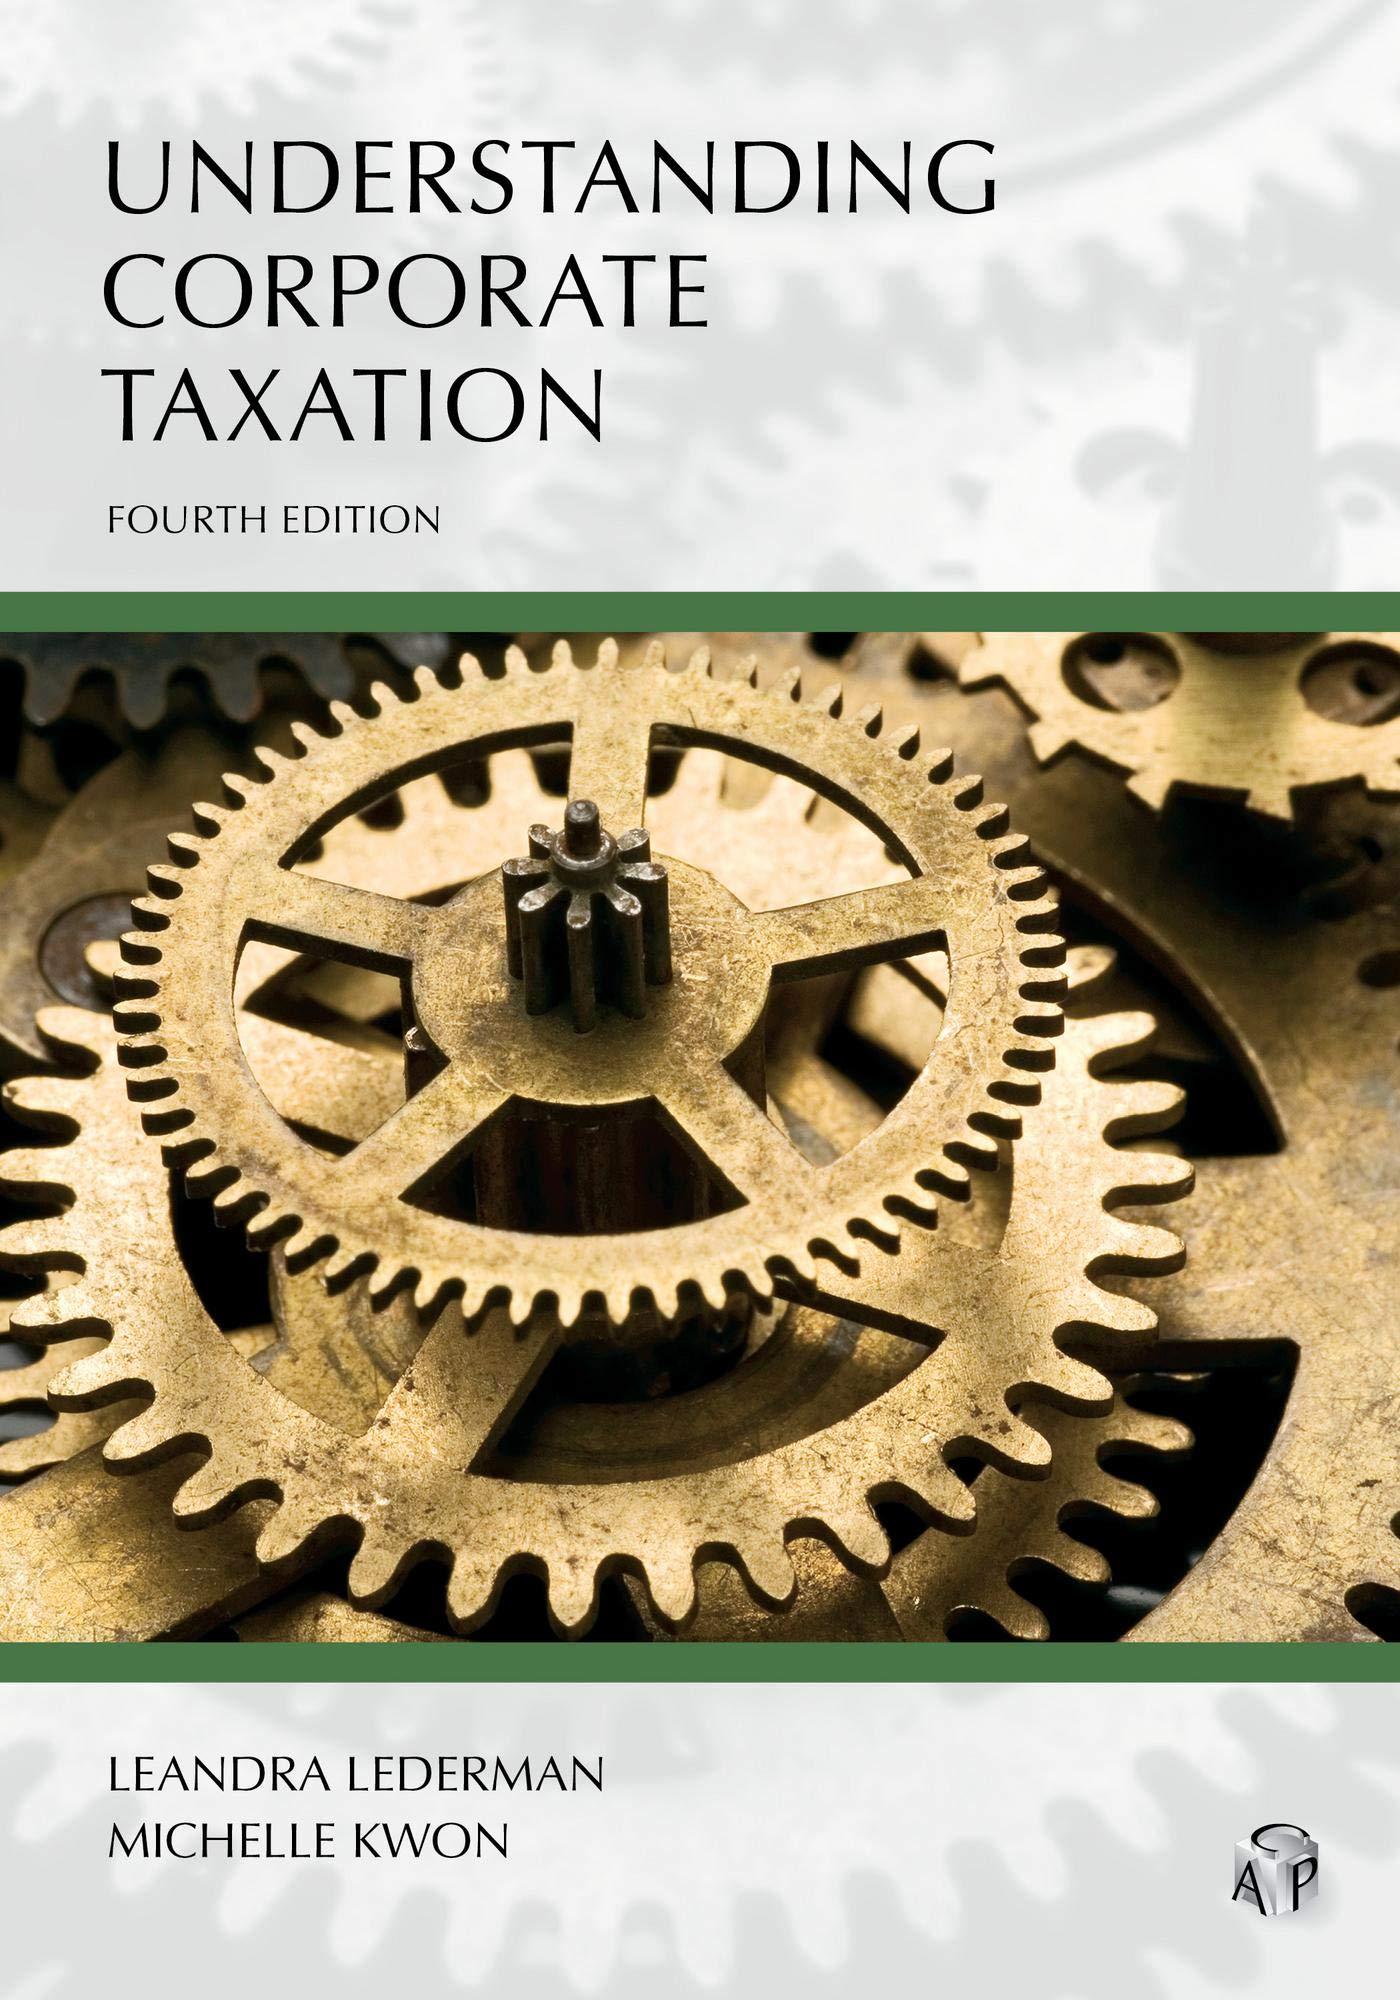 understanding corporate taxation 4th edition leandra lederman, michelle kwon 1531018033, 9781531018030